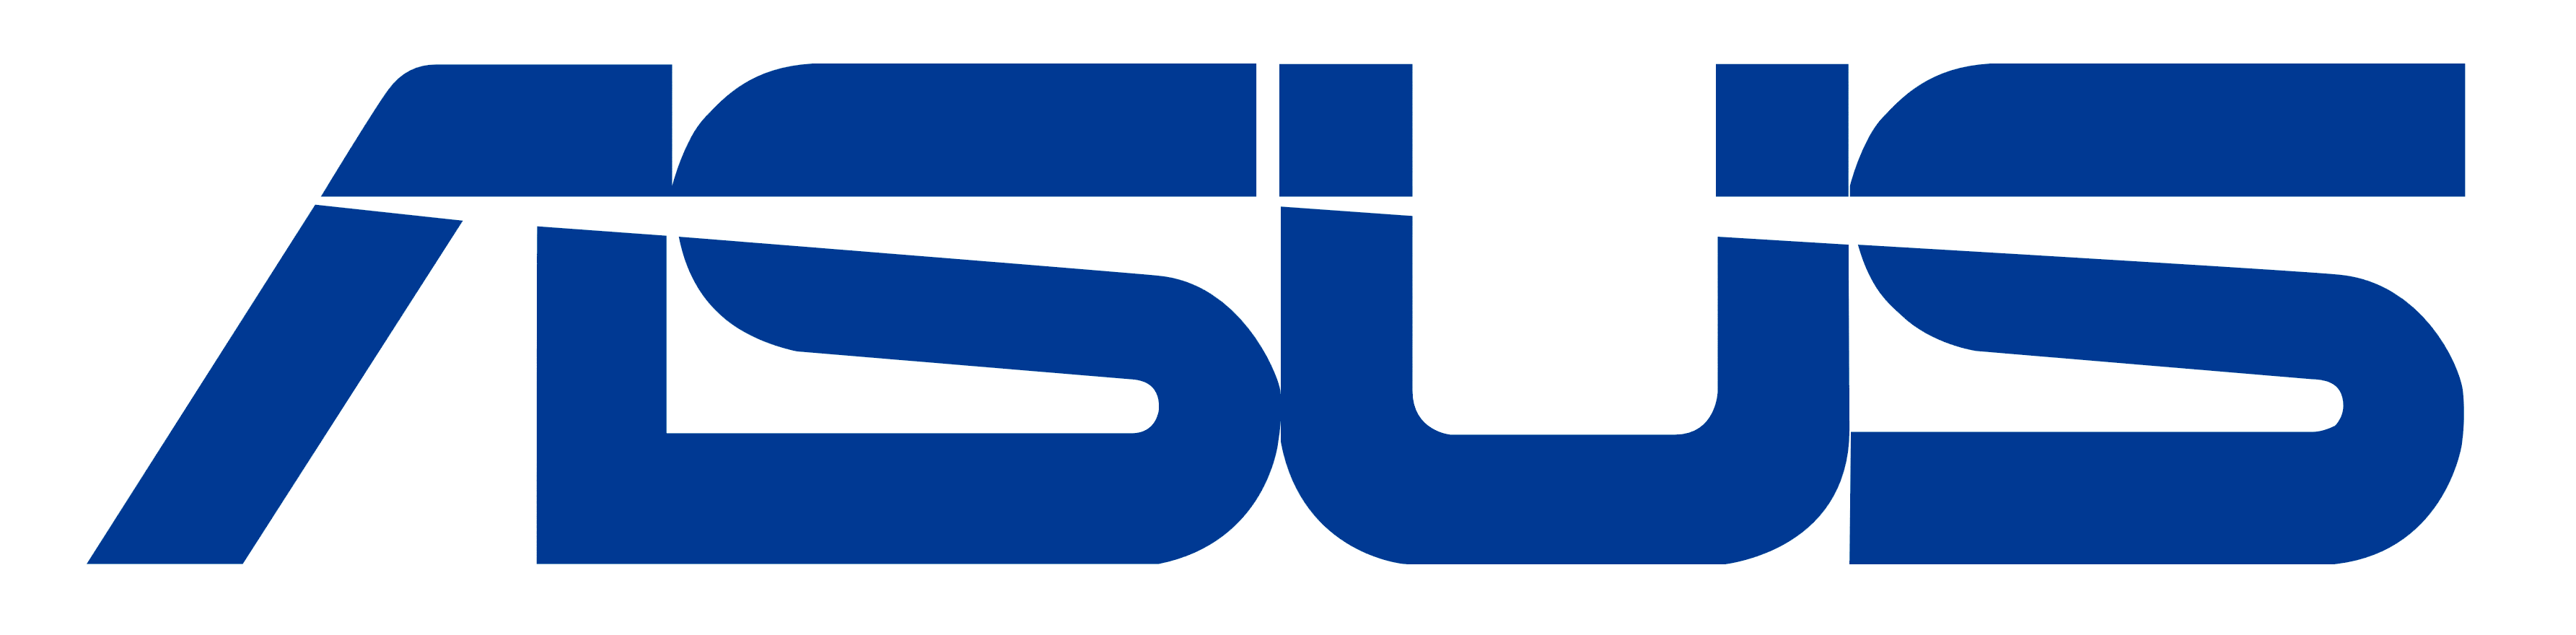 Asus Logo Png Transparent Svg Vector Freebie Supply Images